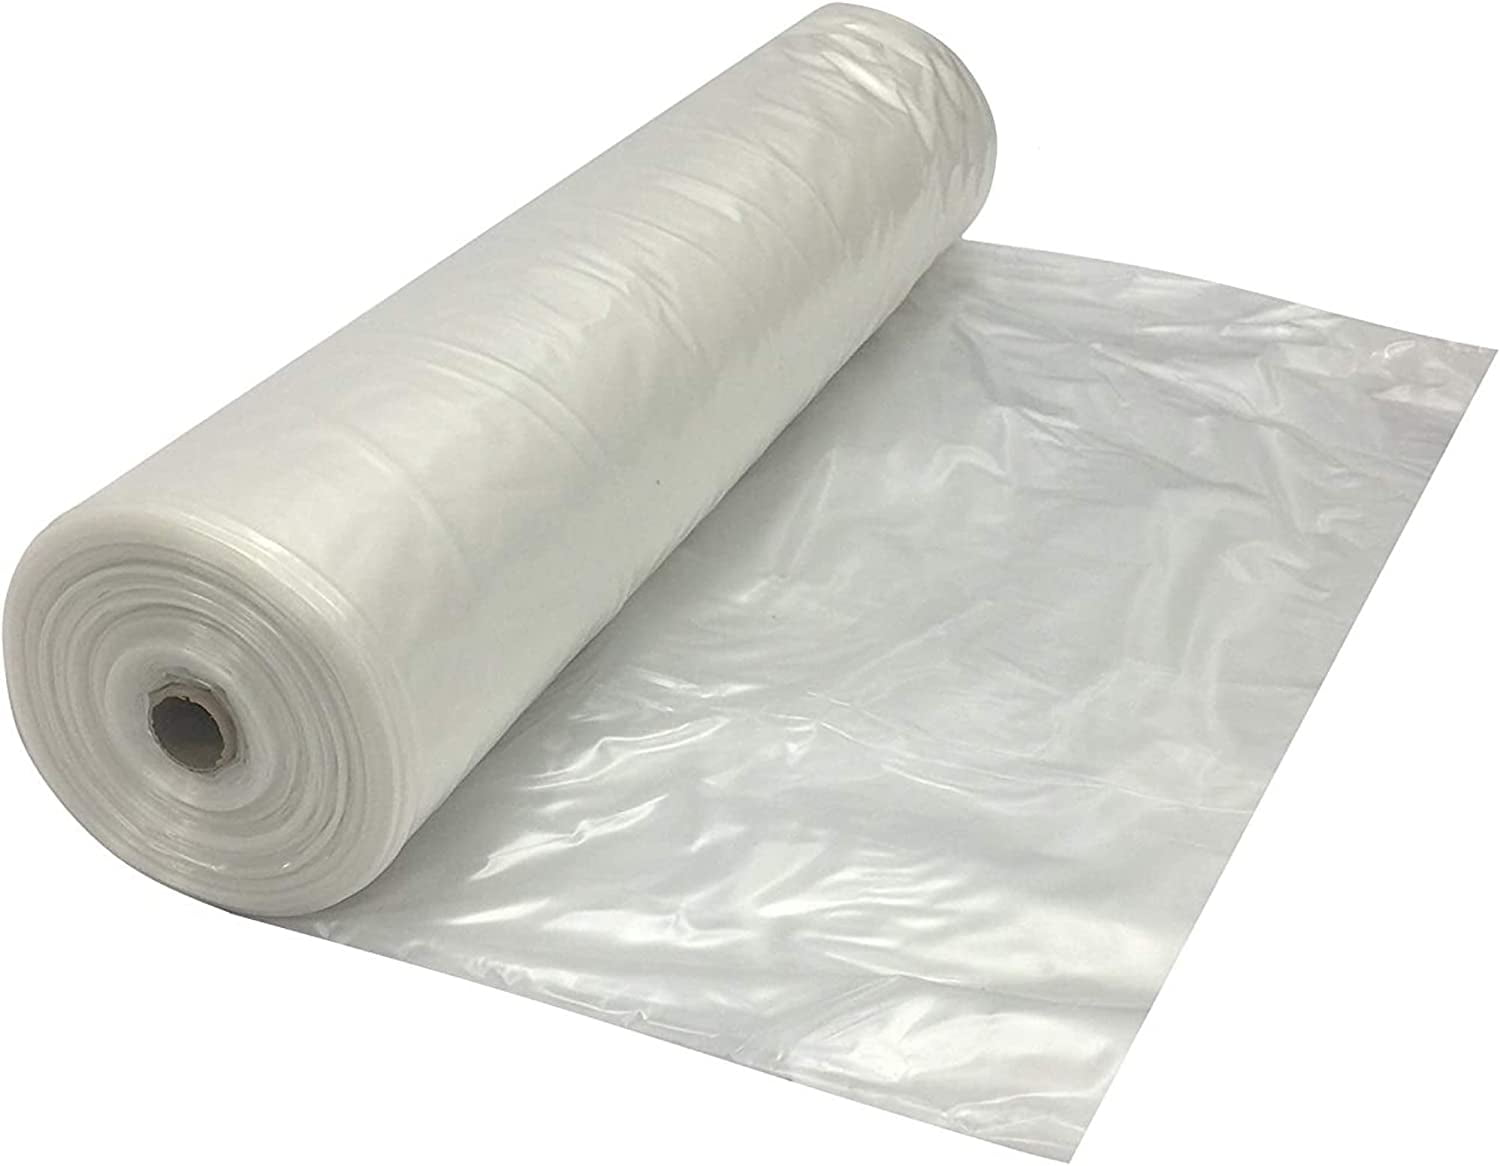 Farm Plastic Supply - Clear Plastic Sheeting - 8 mil - (10' x 100') - Thick  Plastic Sheeting, Heavy Duty Polyethylene Film, Drop Cloth Vapor Barrier